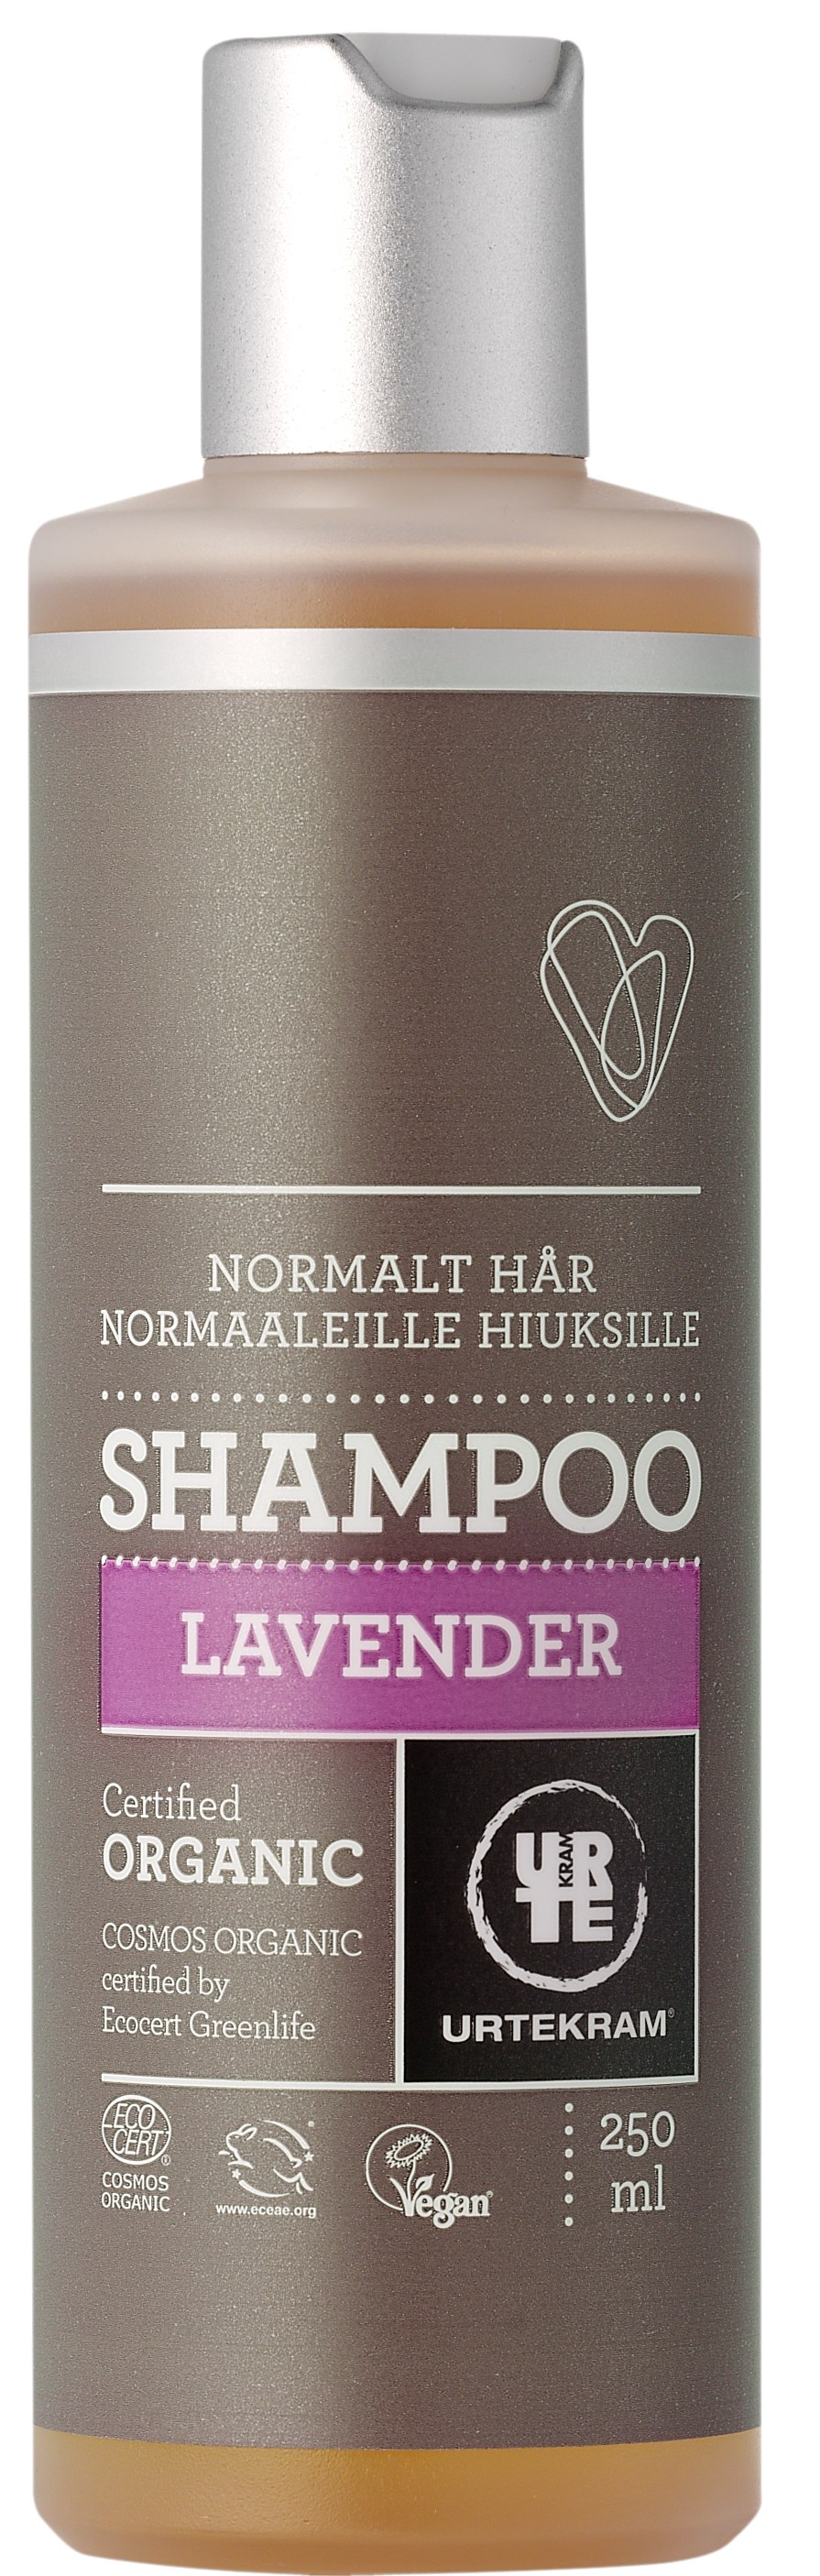 Urtekram Lavender Shampoo 250ml